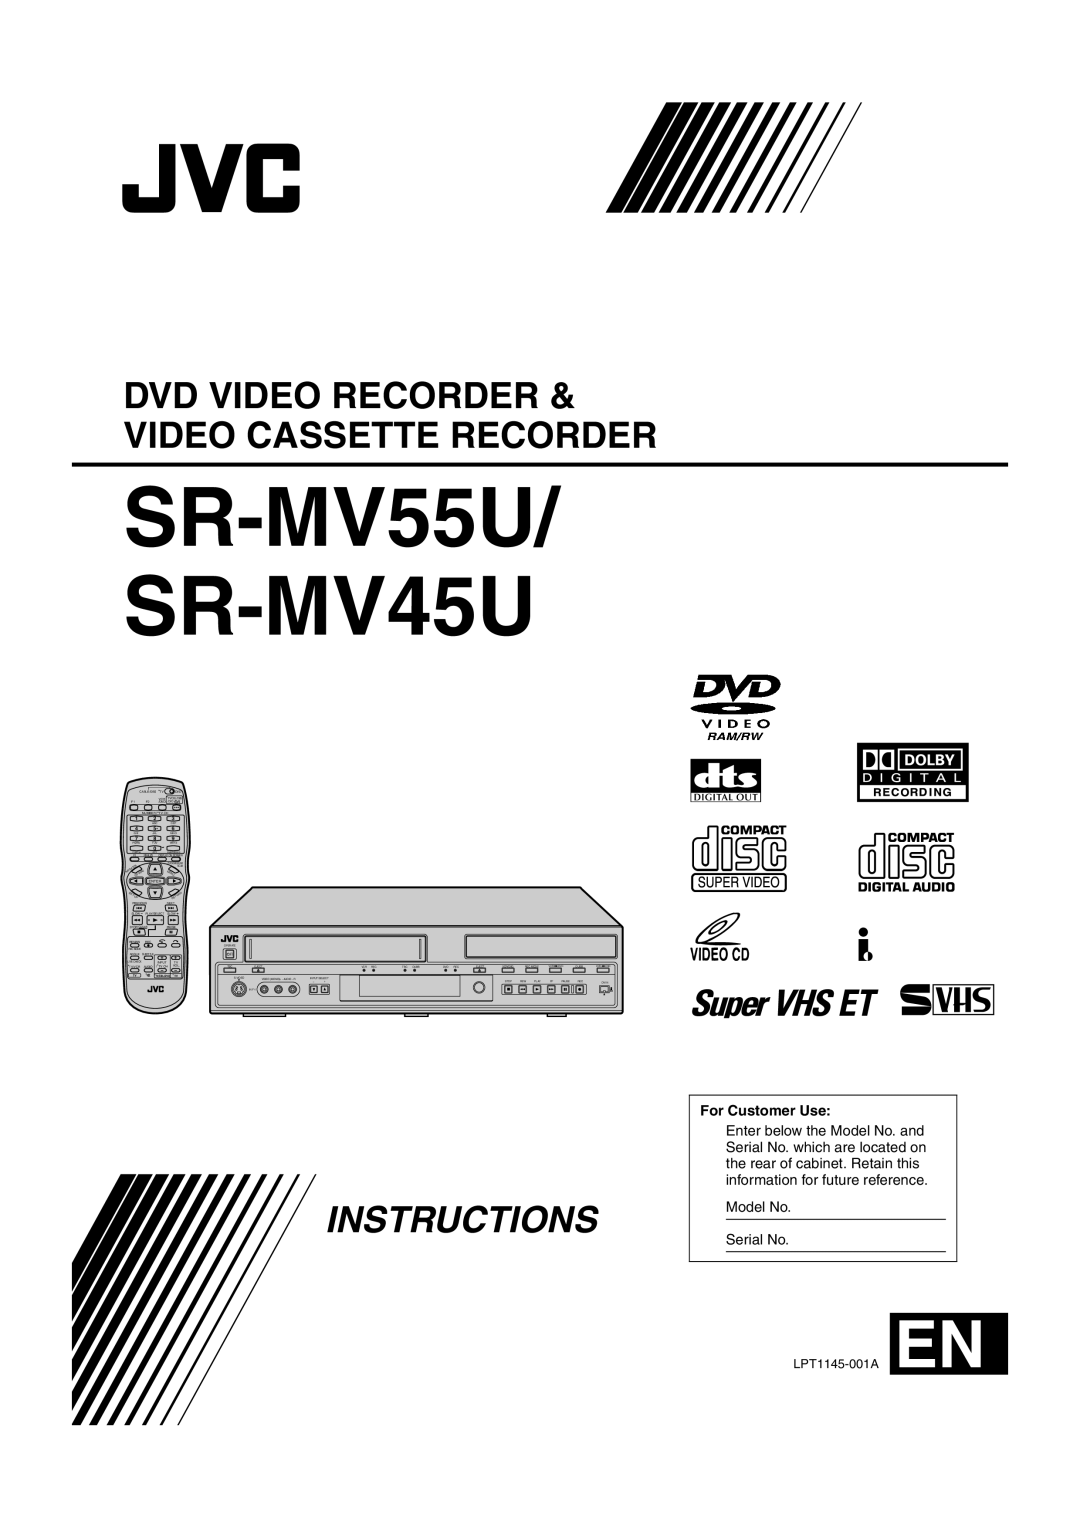 JVC manual SR-MV55U/ SR-MV45U, Instructions, Dvd Video Recorder & Video Cassette Recorder, For Customer Use, Tv/Cbl/Dvd 